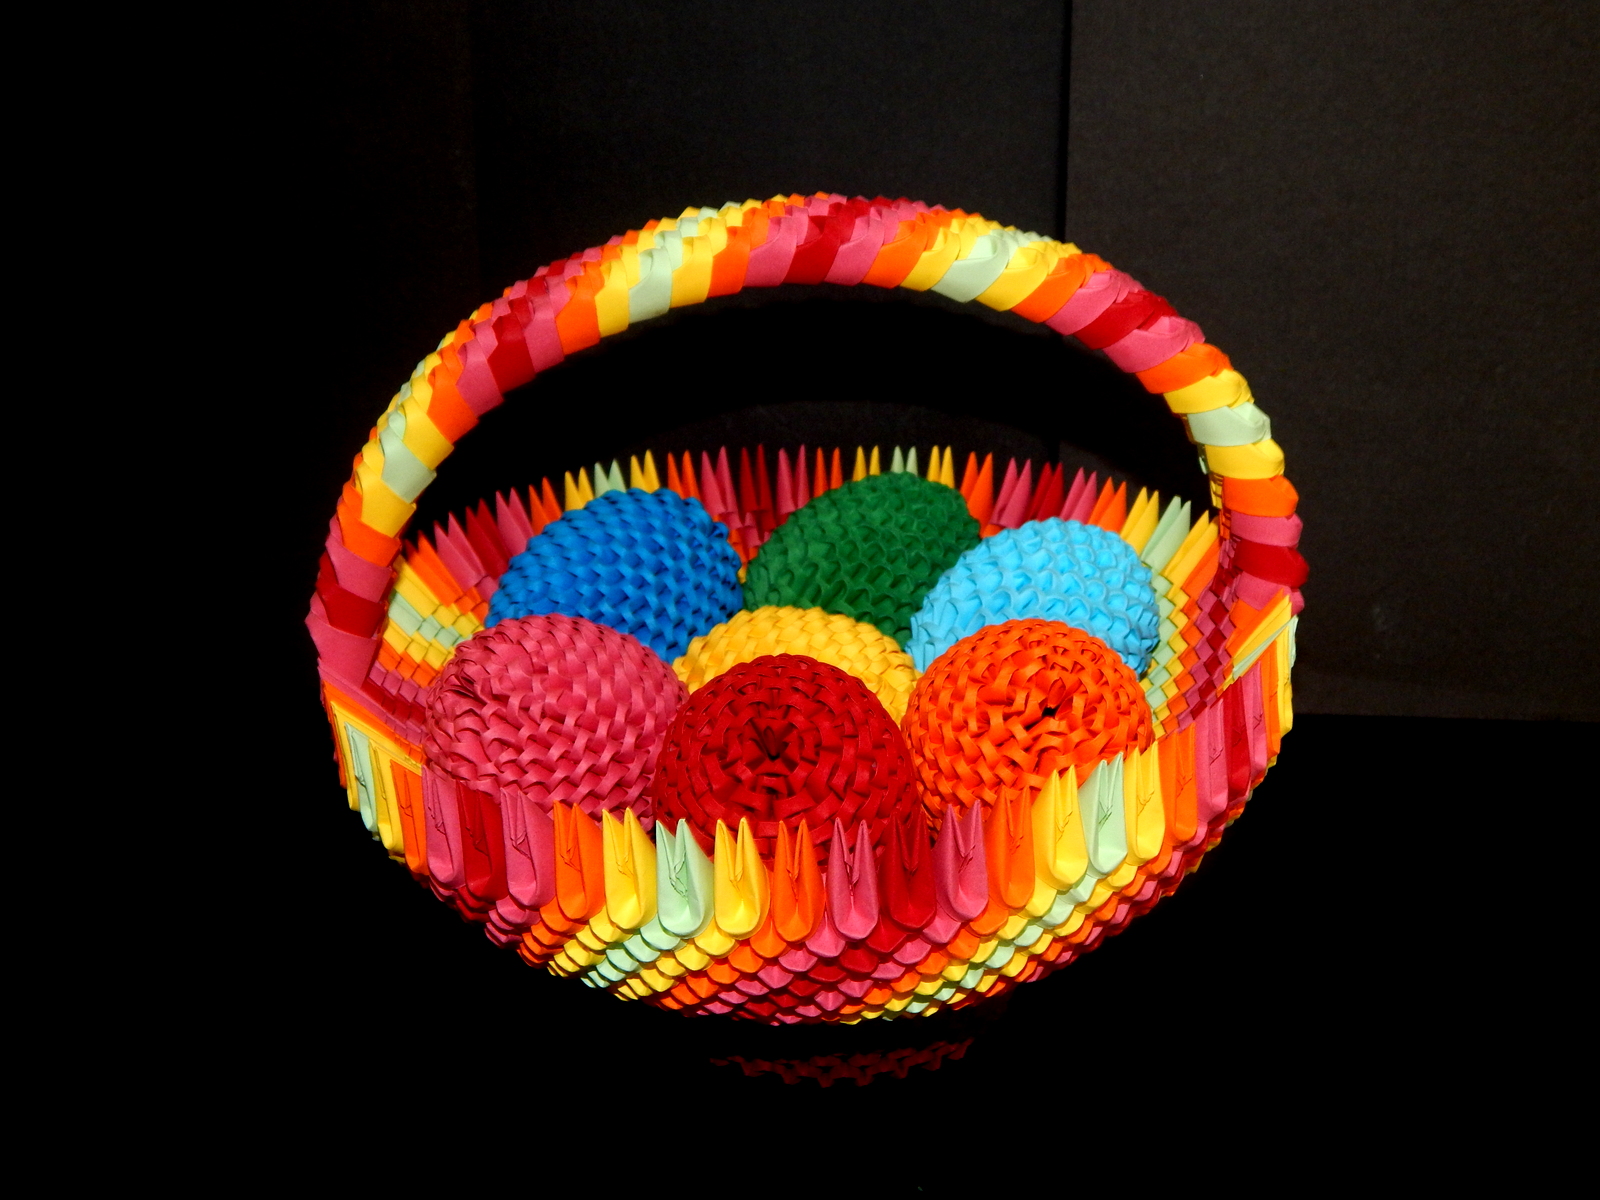 Razcapapercraft 3D Origami Rainbow Basket